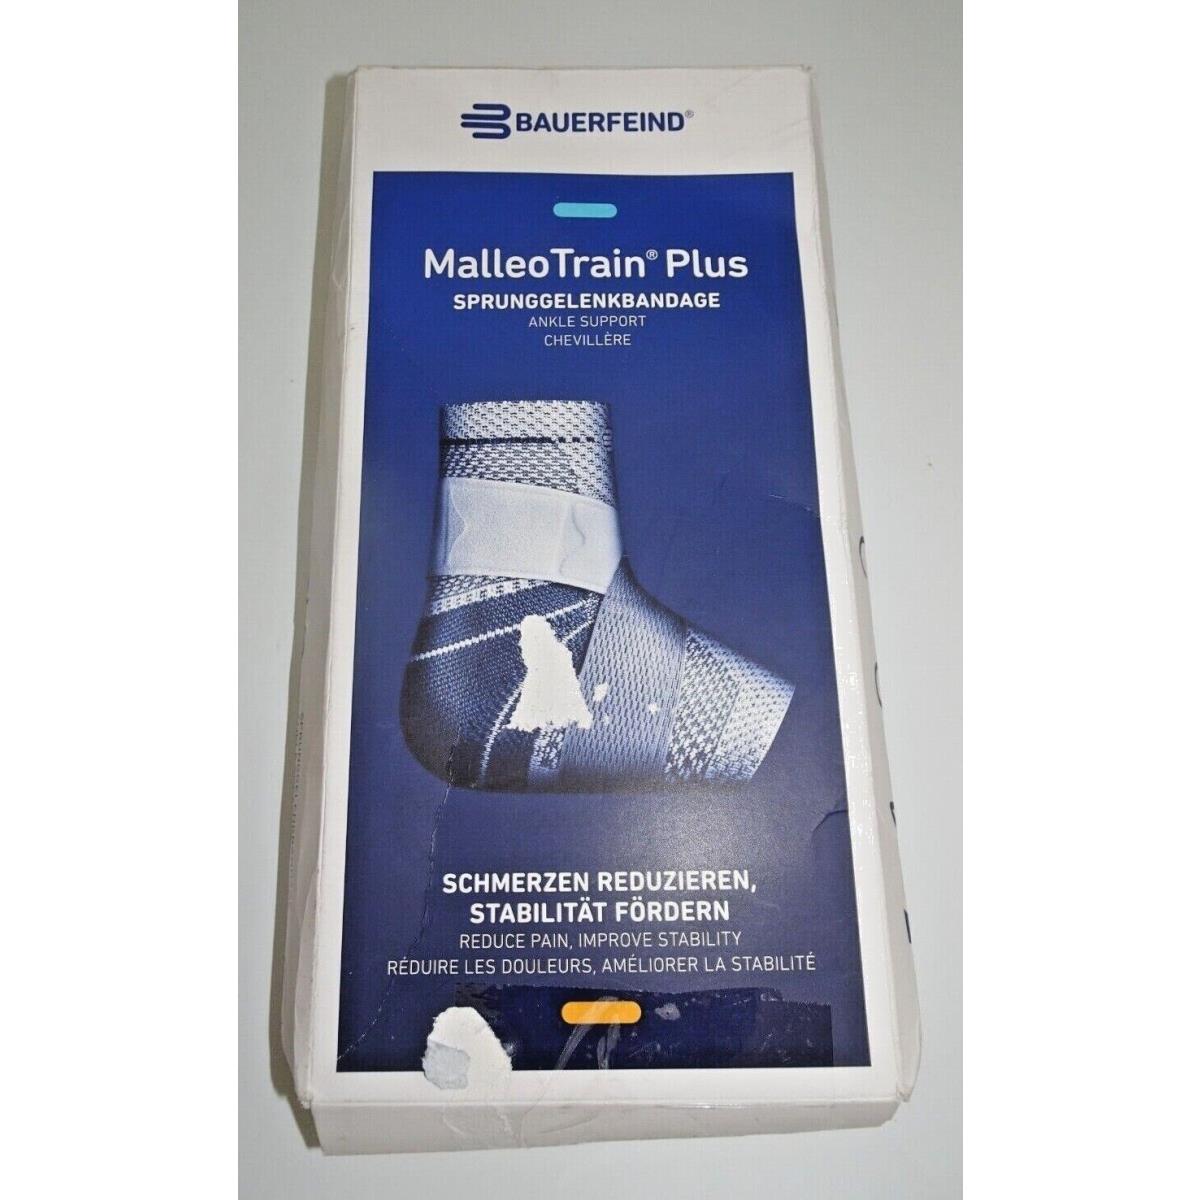 Bauerfeind Malleotrain Plus- Ankle Support Right Foot - Size 1 - Color Titanium